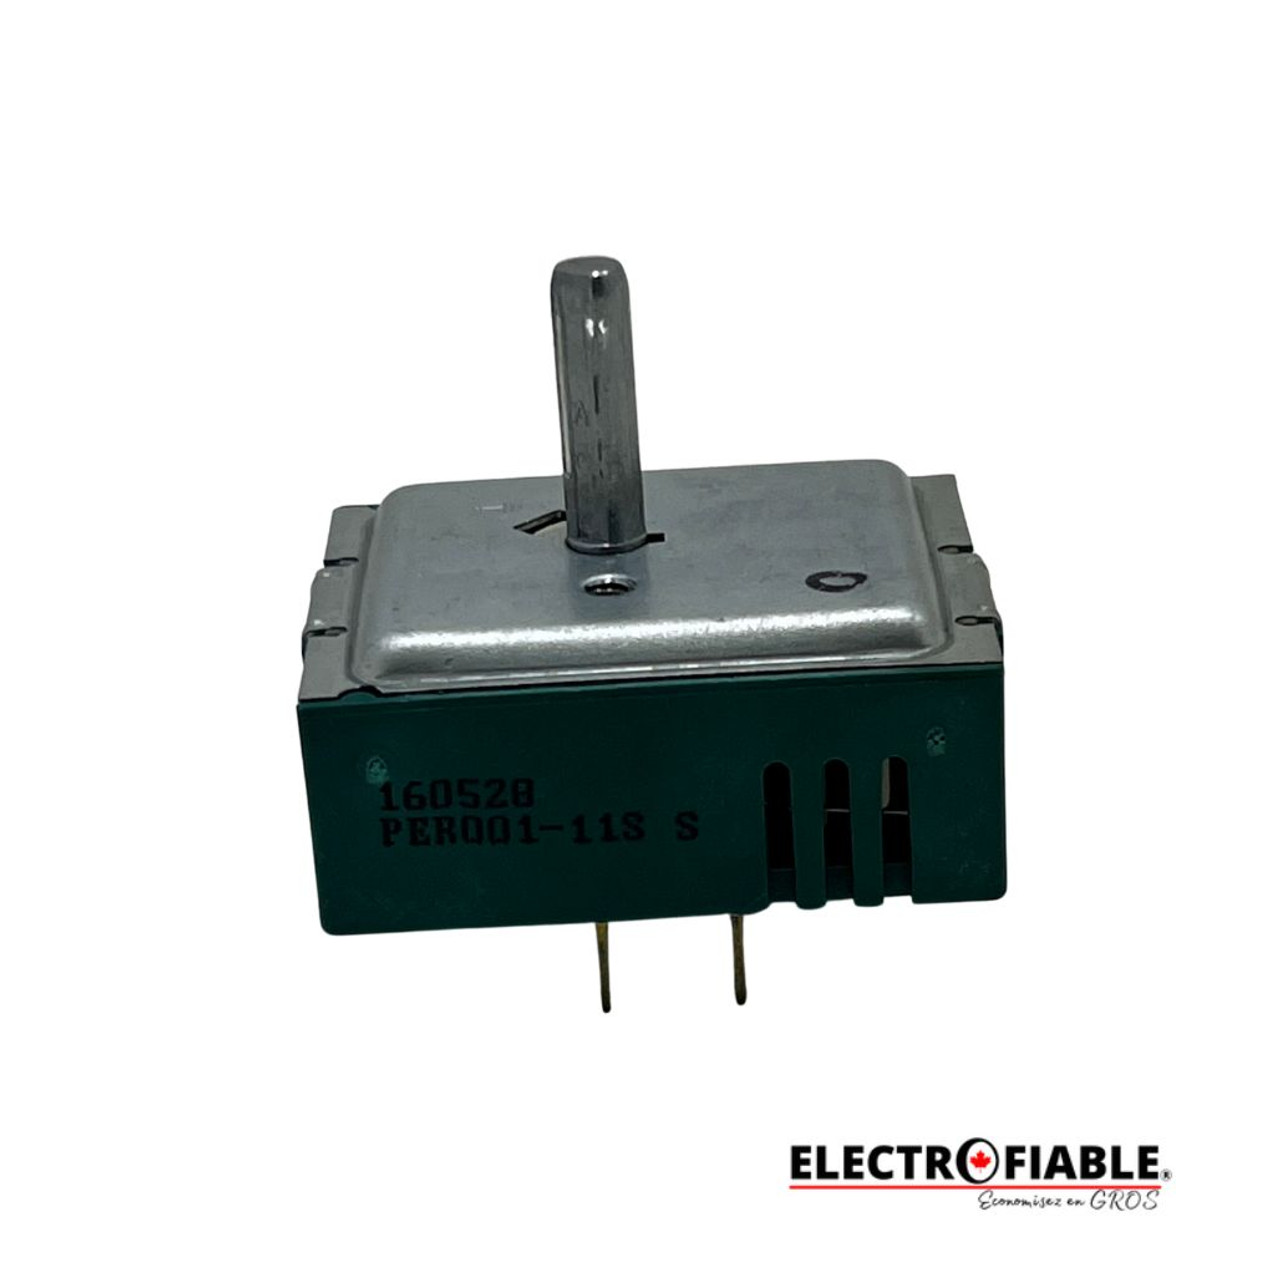 PER001-11S S Rotary Switch For LG Range EBF62174903